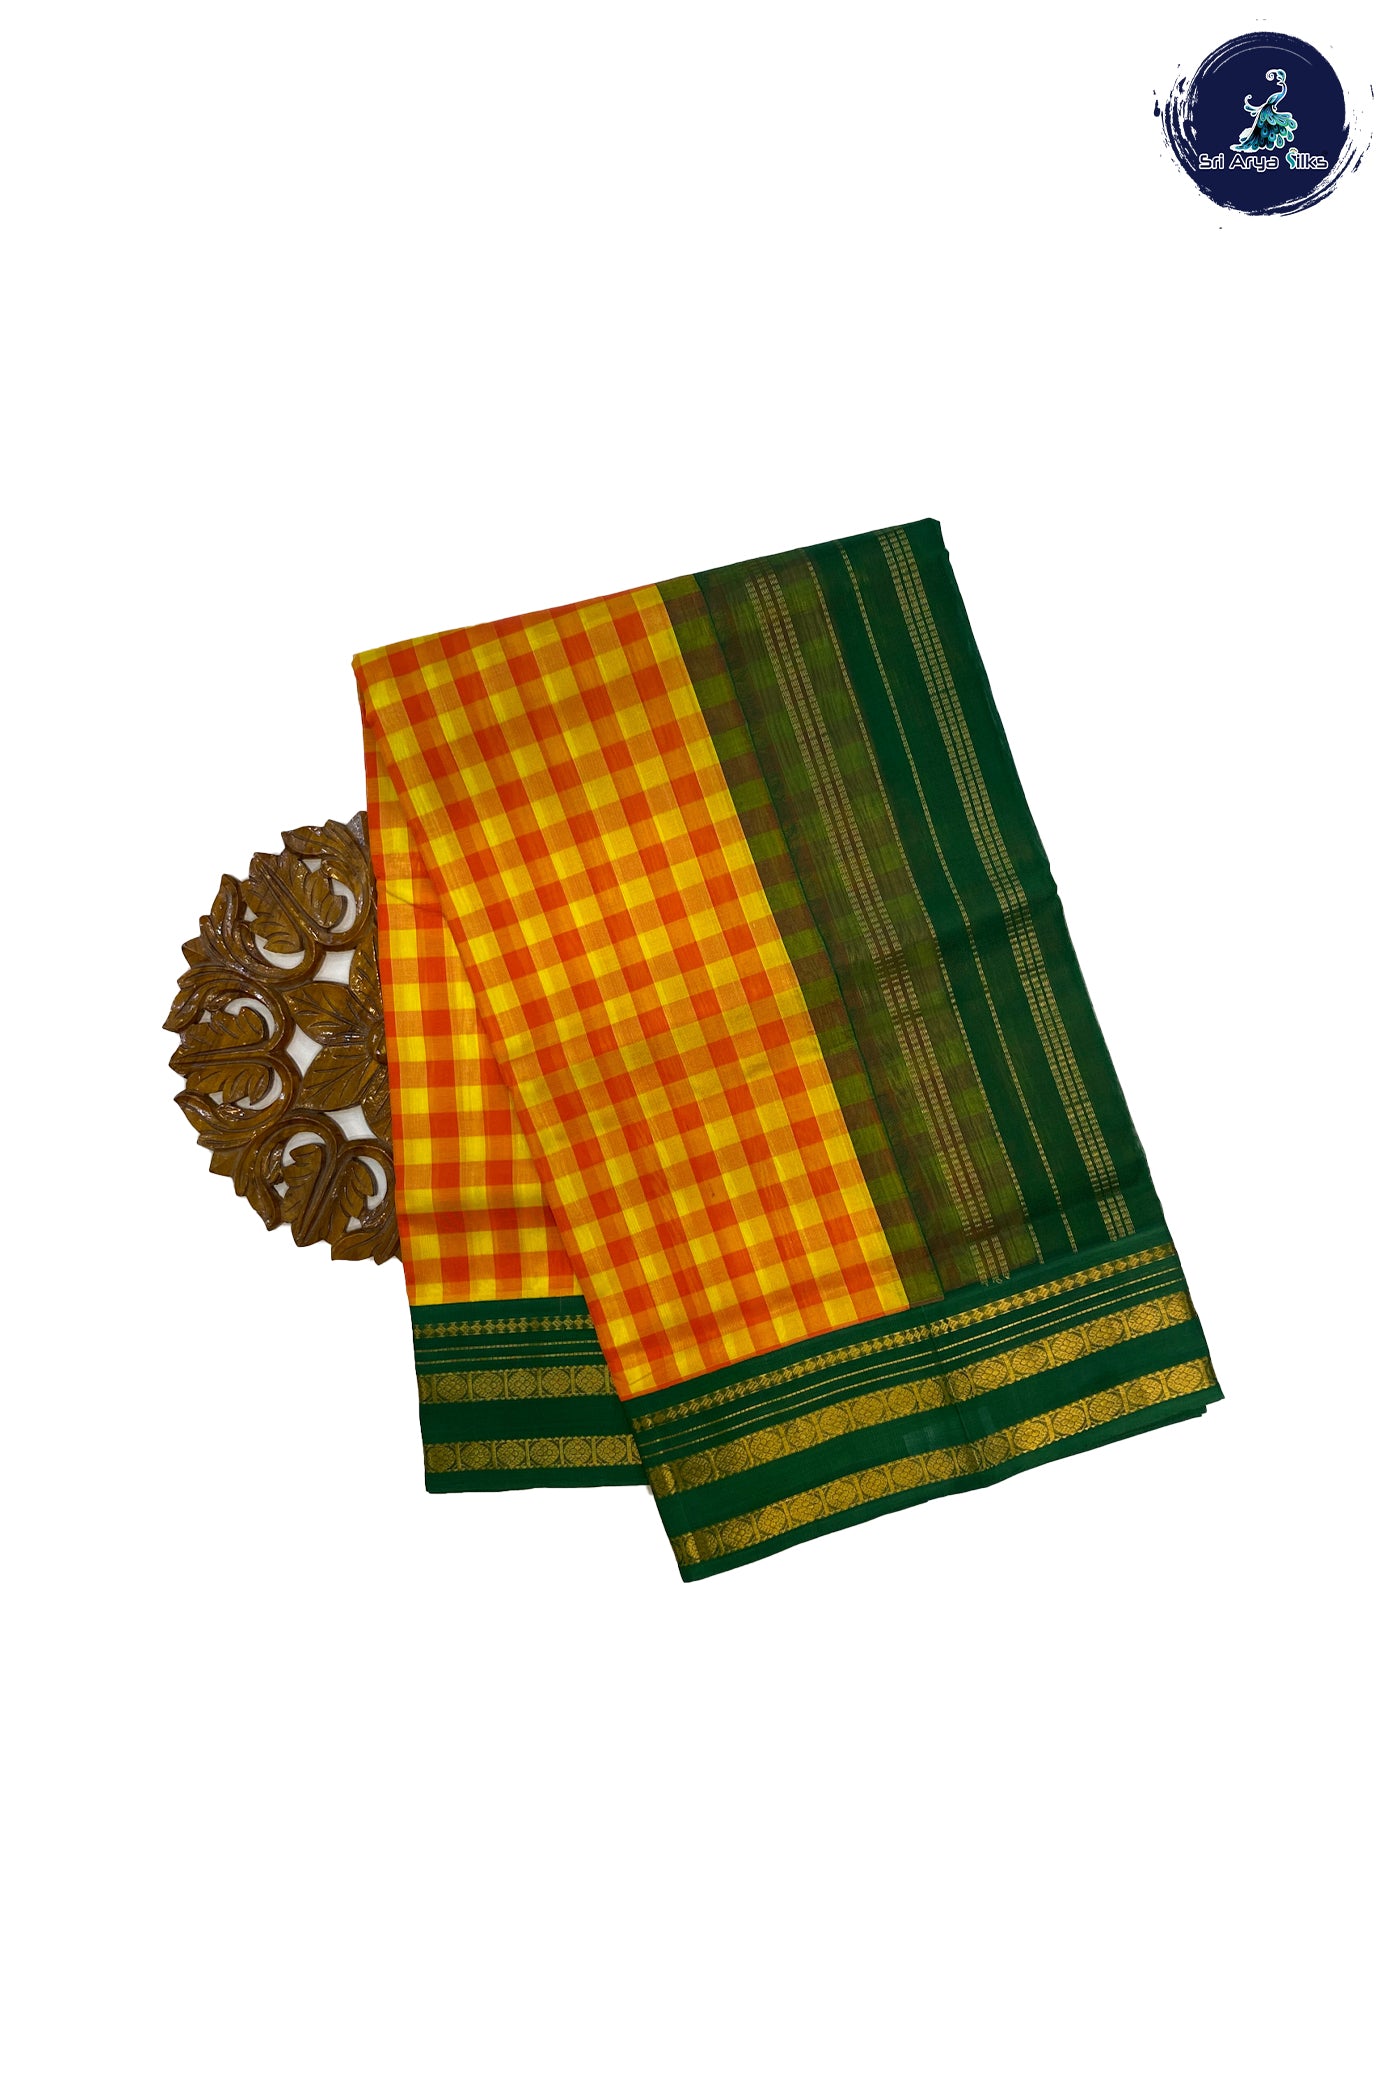 Multi Silk Cotton Saree With Checked Pattern